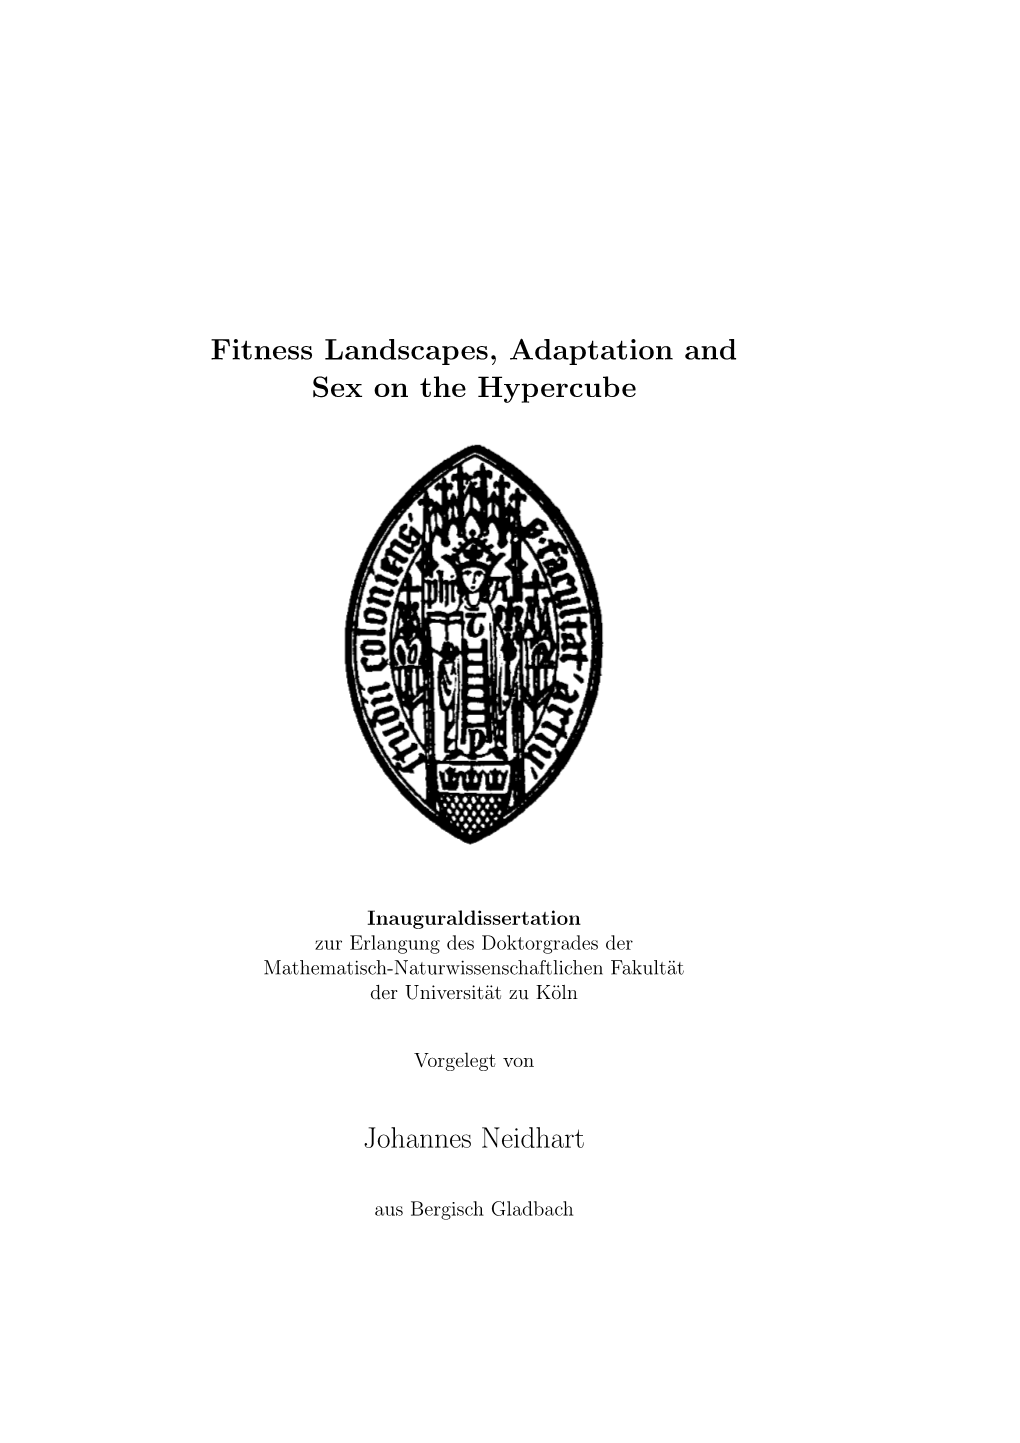 Fitness Landscapes, Adaptation and Sex on the Hypercube Johannes Neidhart